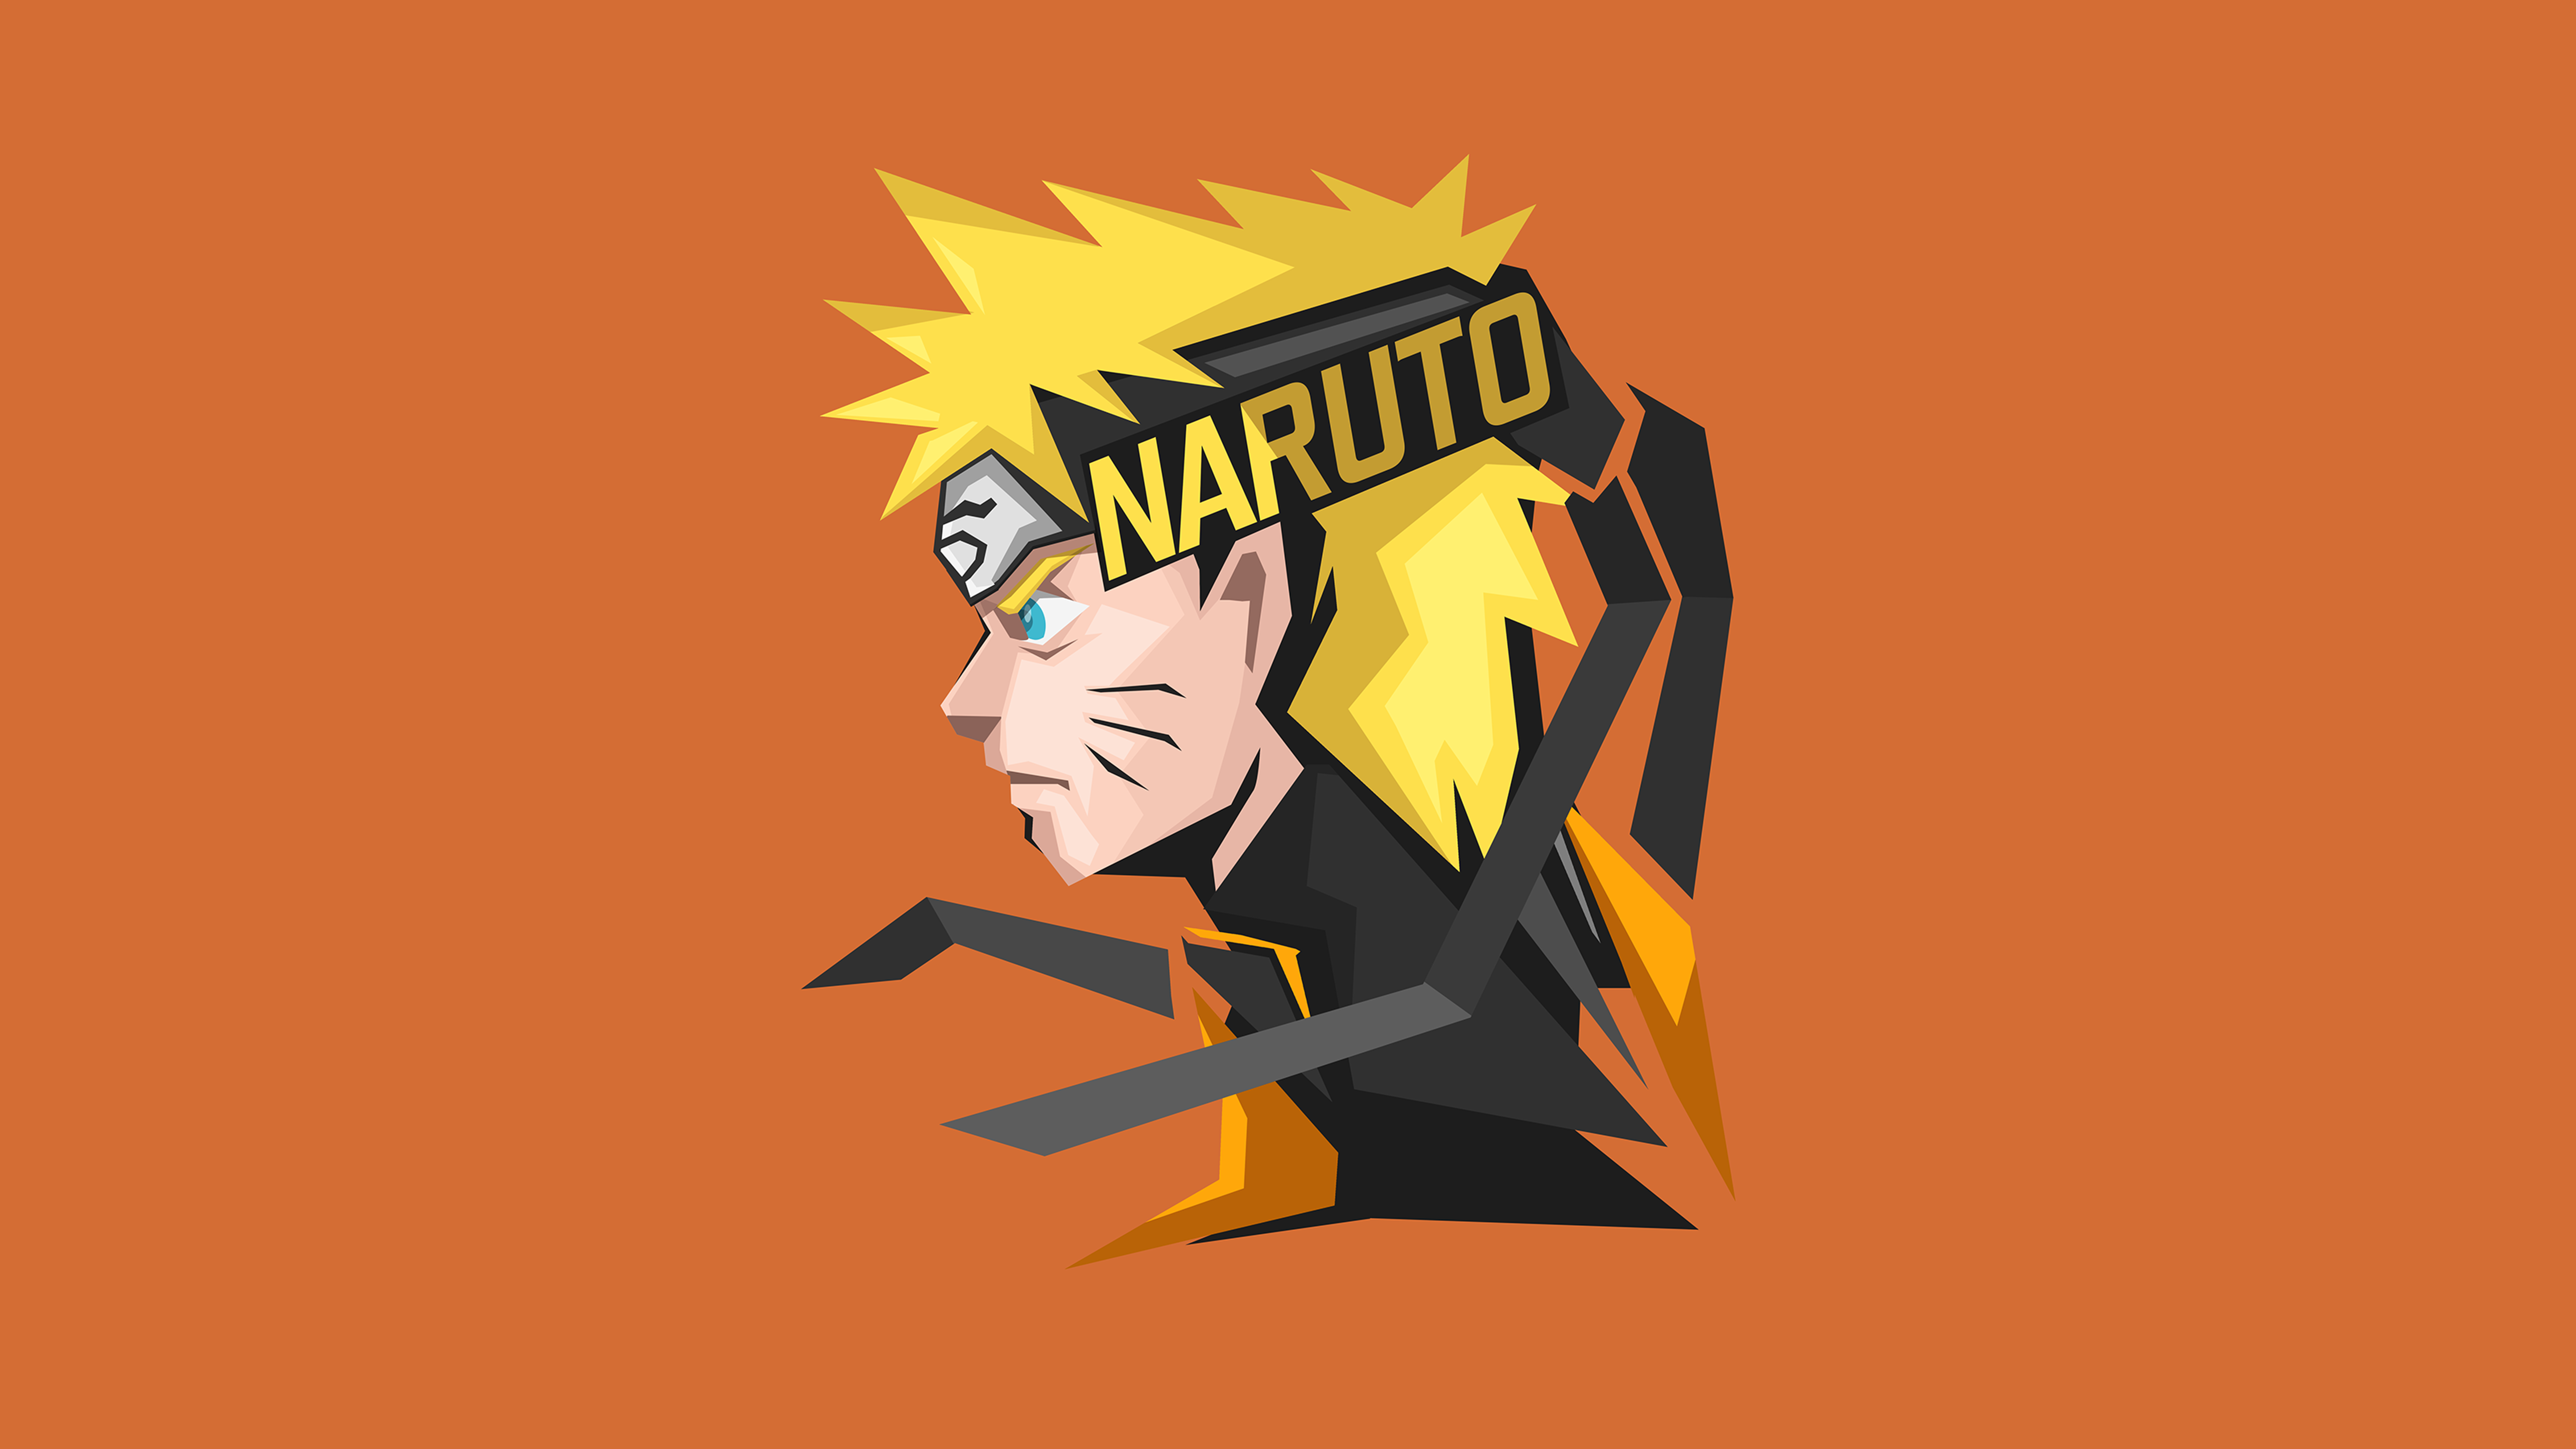 Naruto Uzumaki 8k Ultra HD Wallpaper Background Image 7680x4320 7680x4320